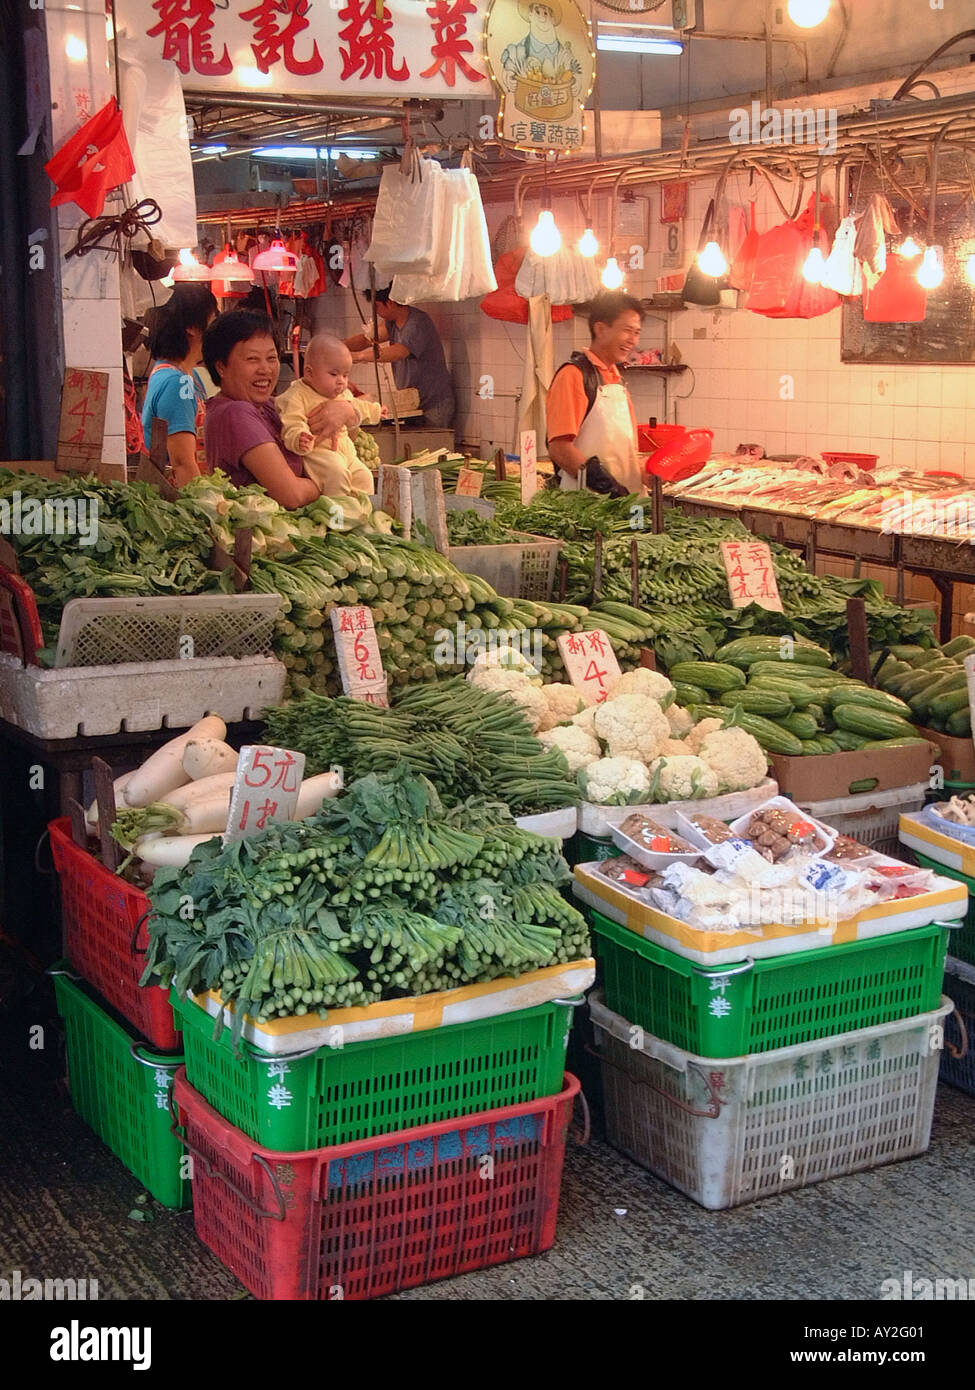 North Point Wet Market in Hong Kong, China. Stock Photo